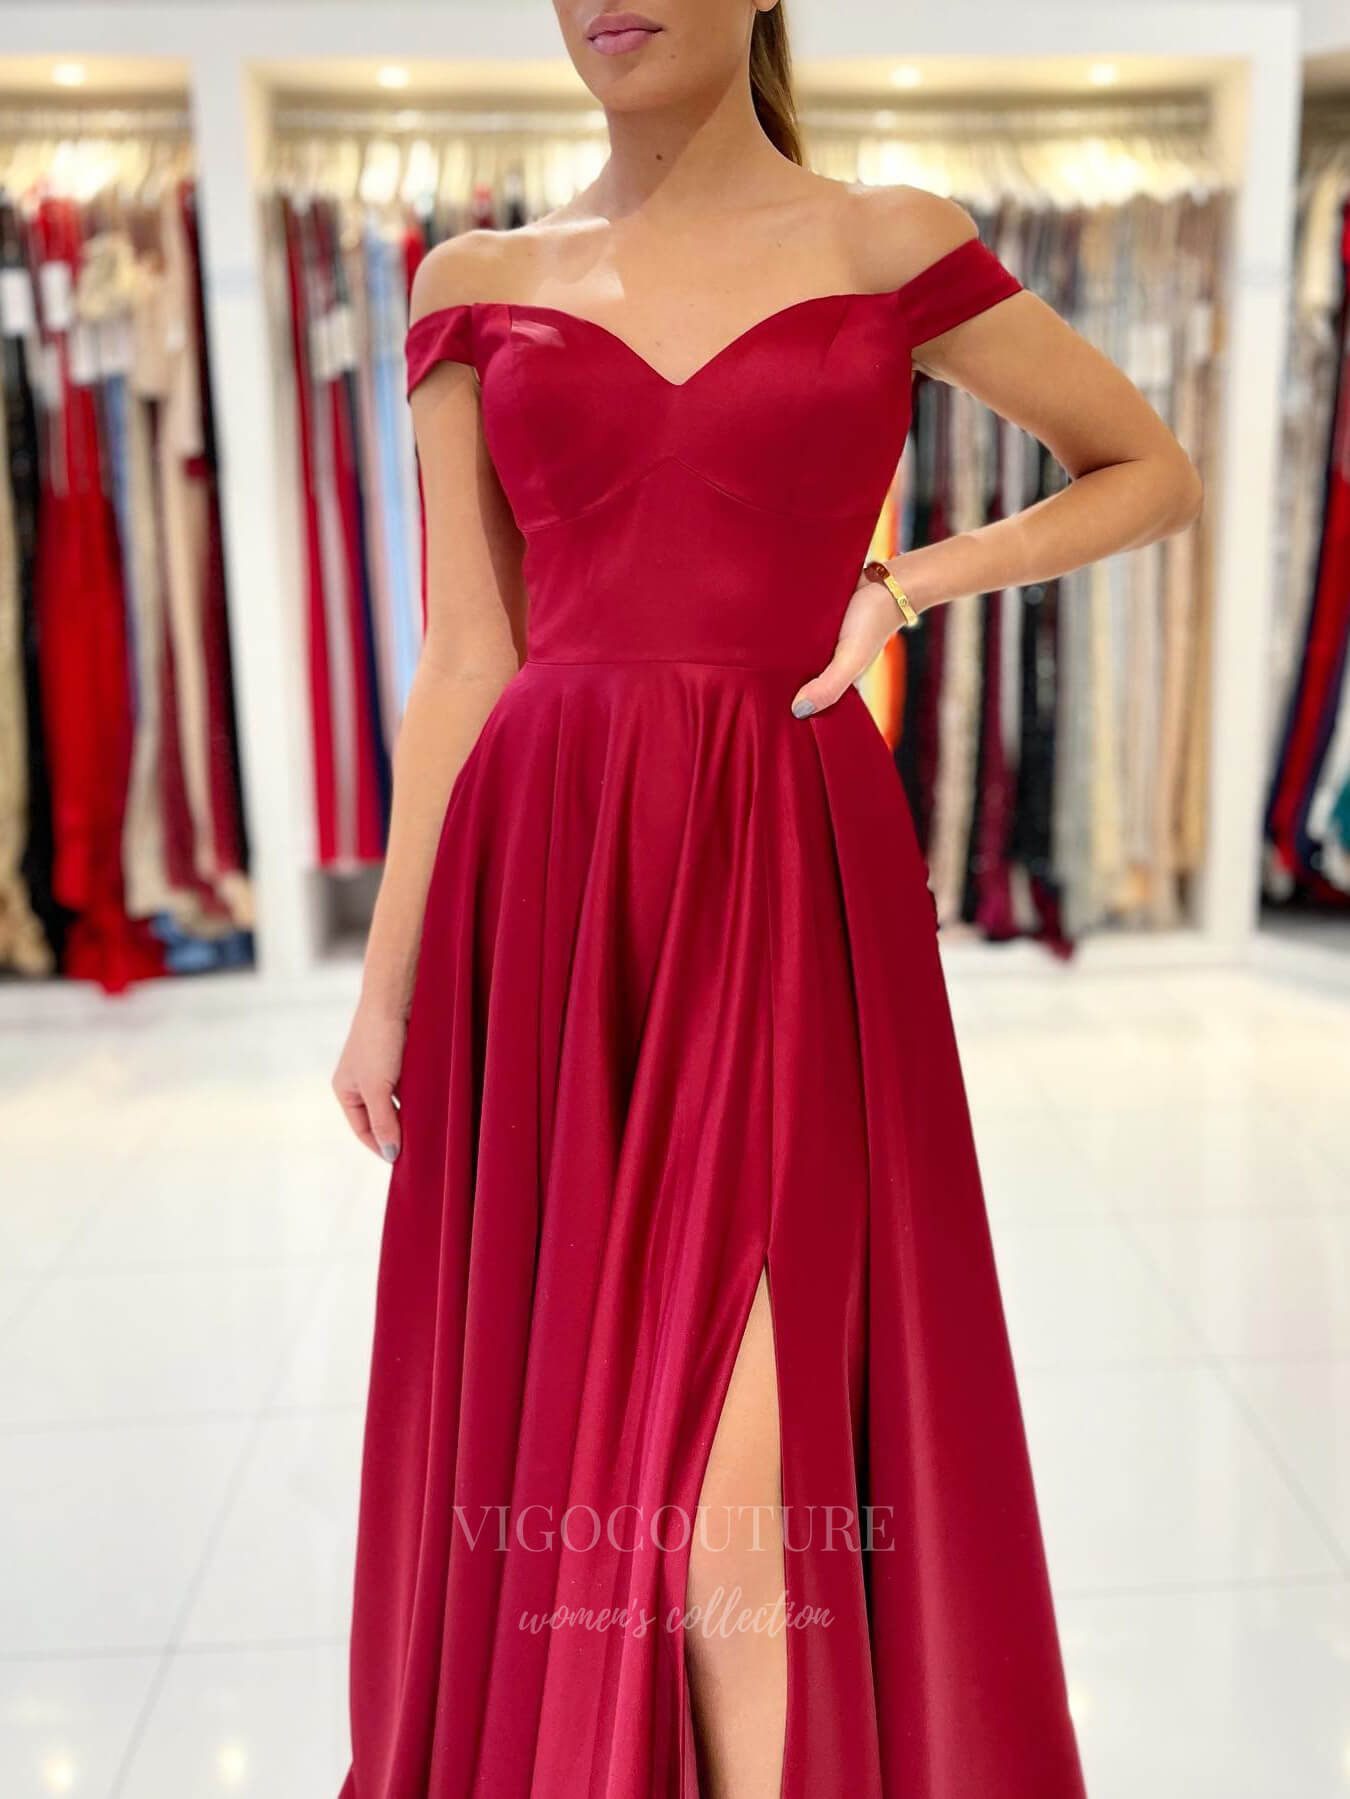 vigocouture-Red Satin Off the Shoulder Prom Dress 20947-Prom Dresses-vigocouture-